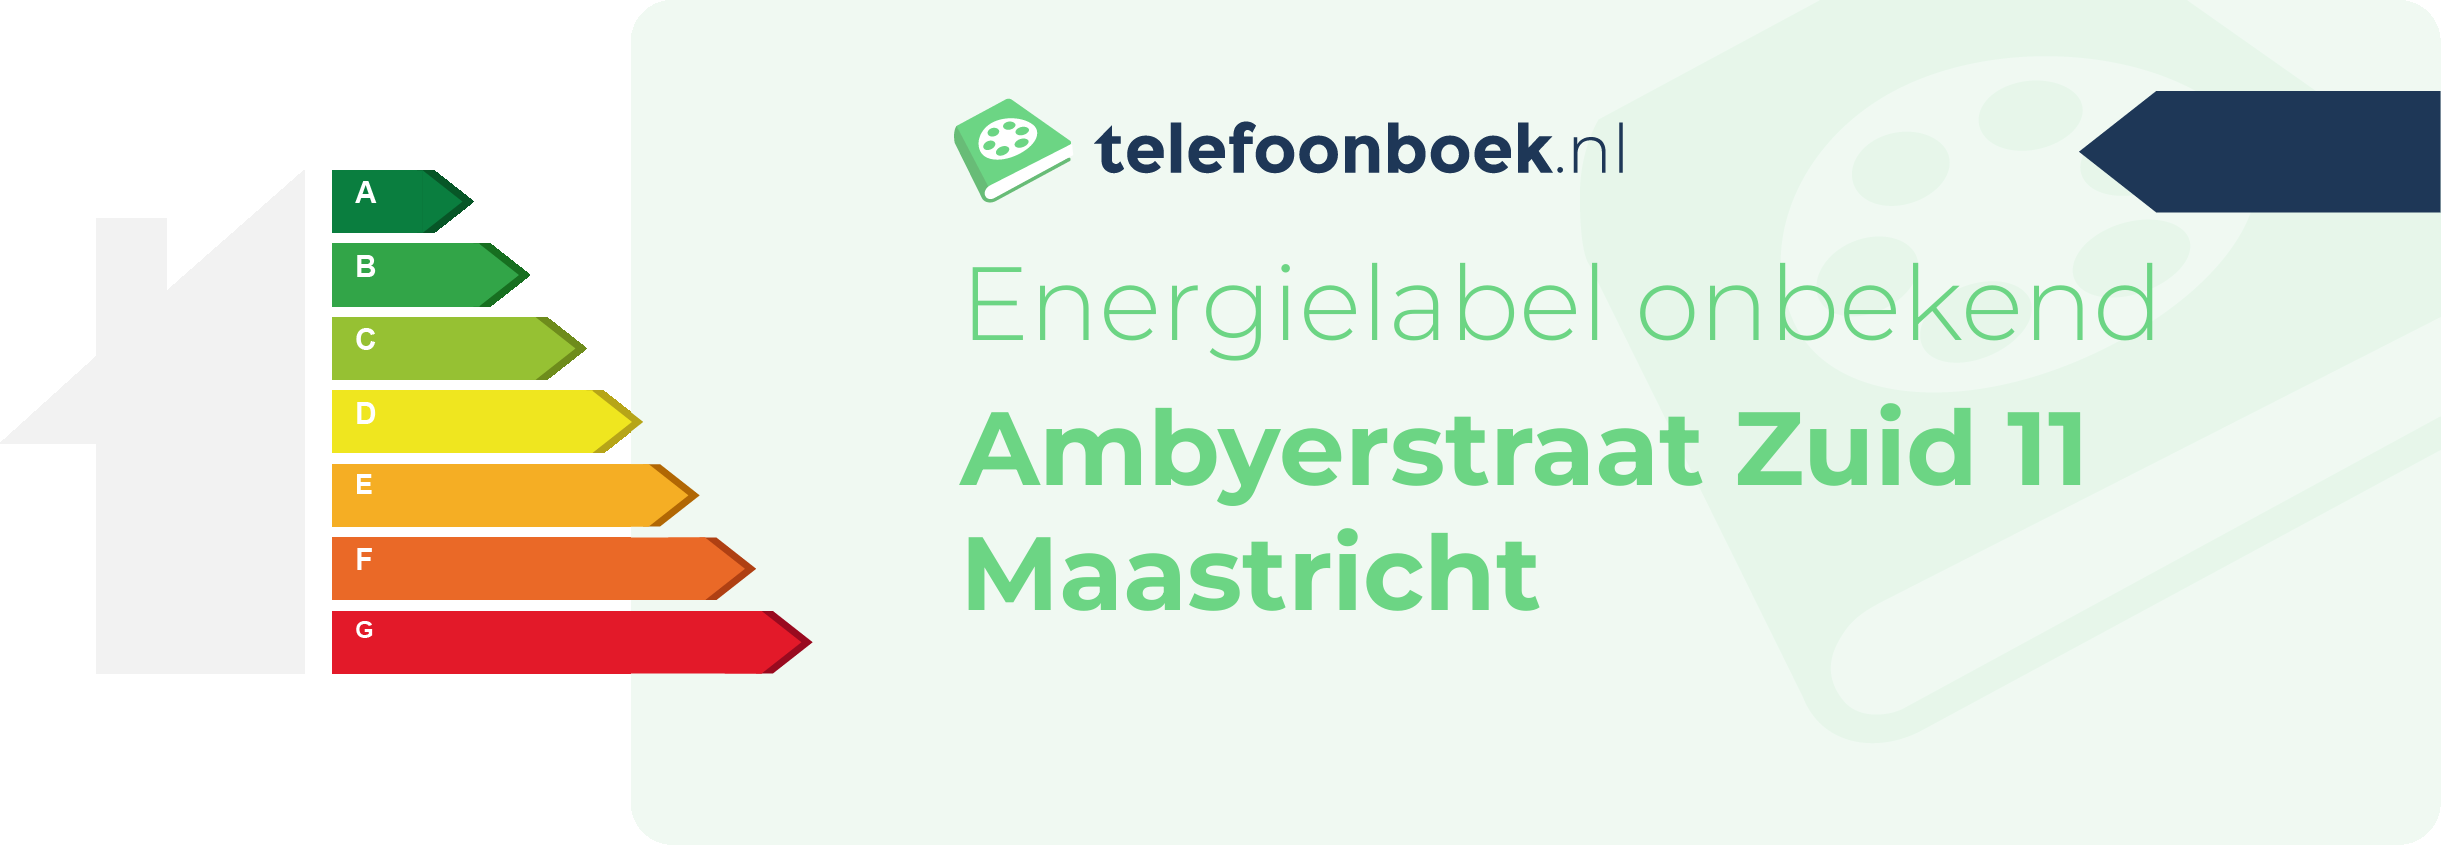 Energielabel Ambyerstraat Zuid 11 Maastricht